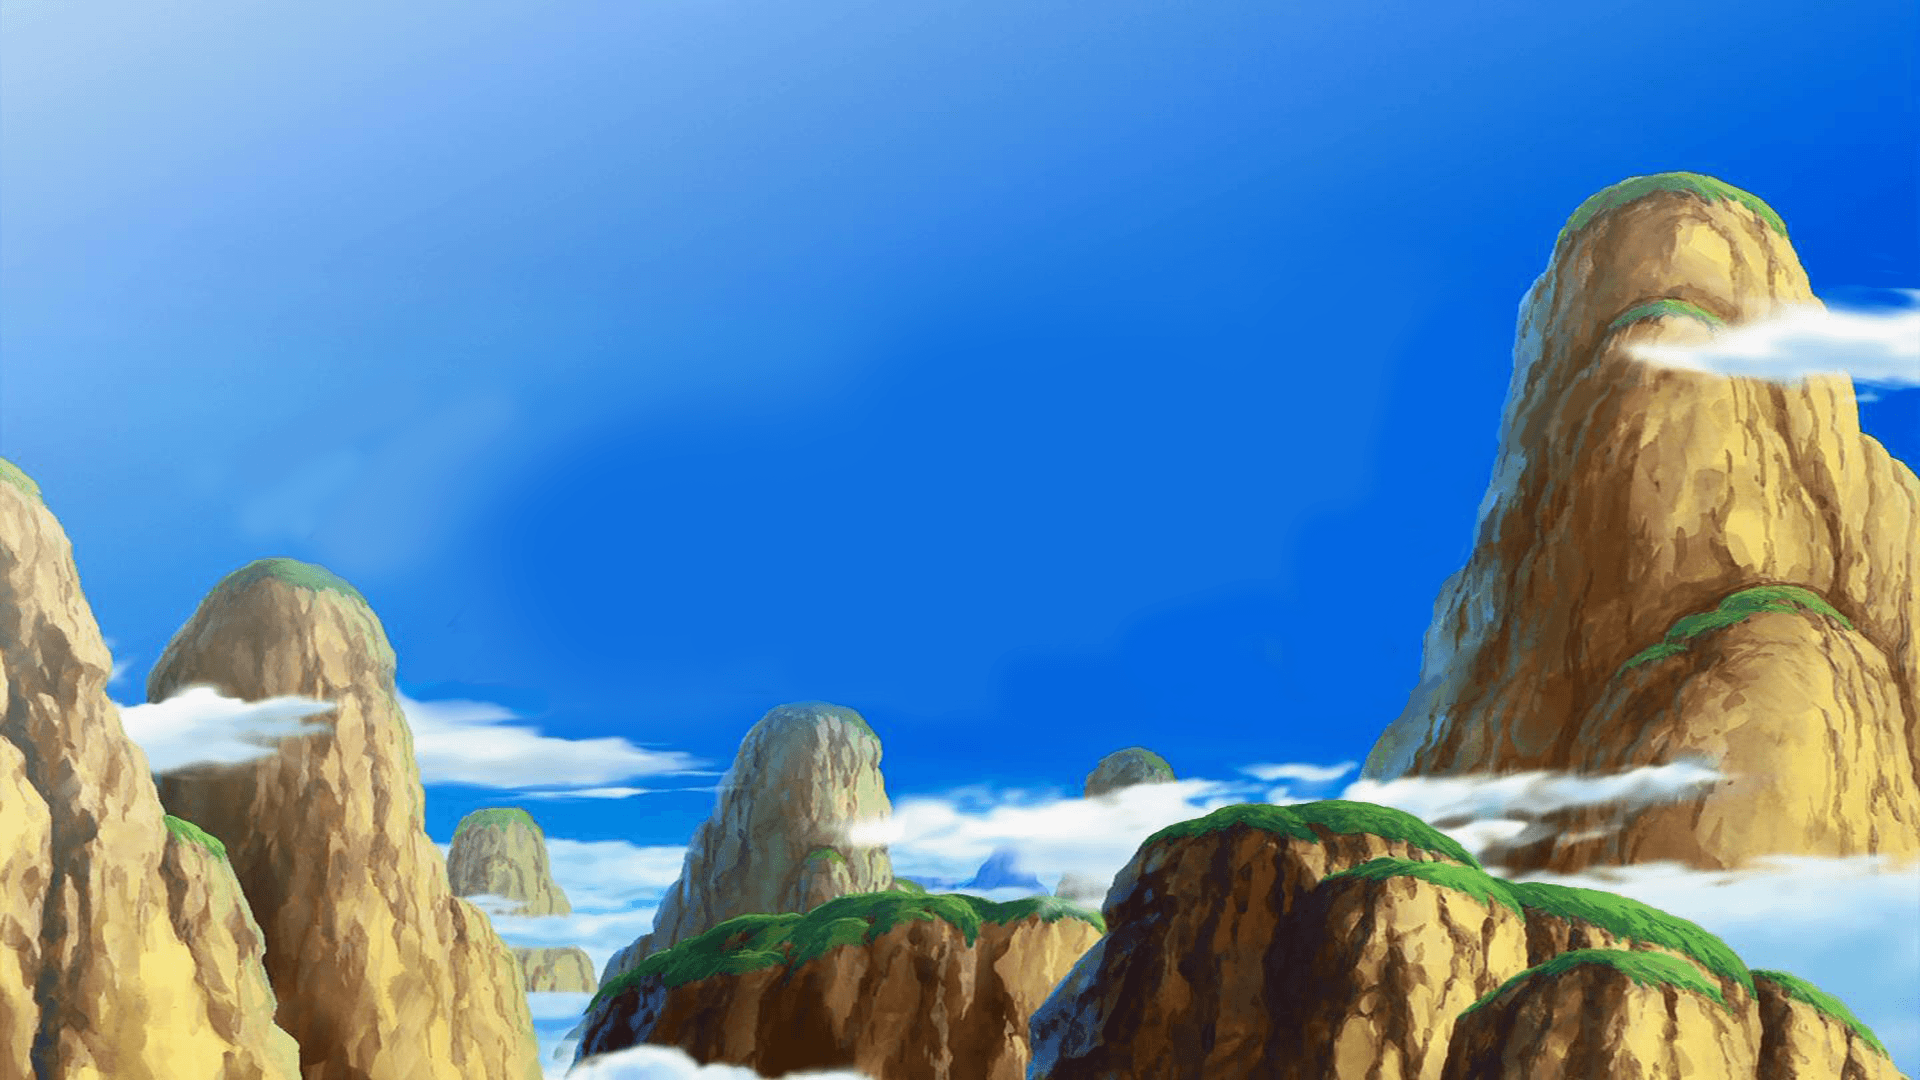 Dragon Ball Z Backgrounds - Wallpaper Cave